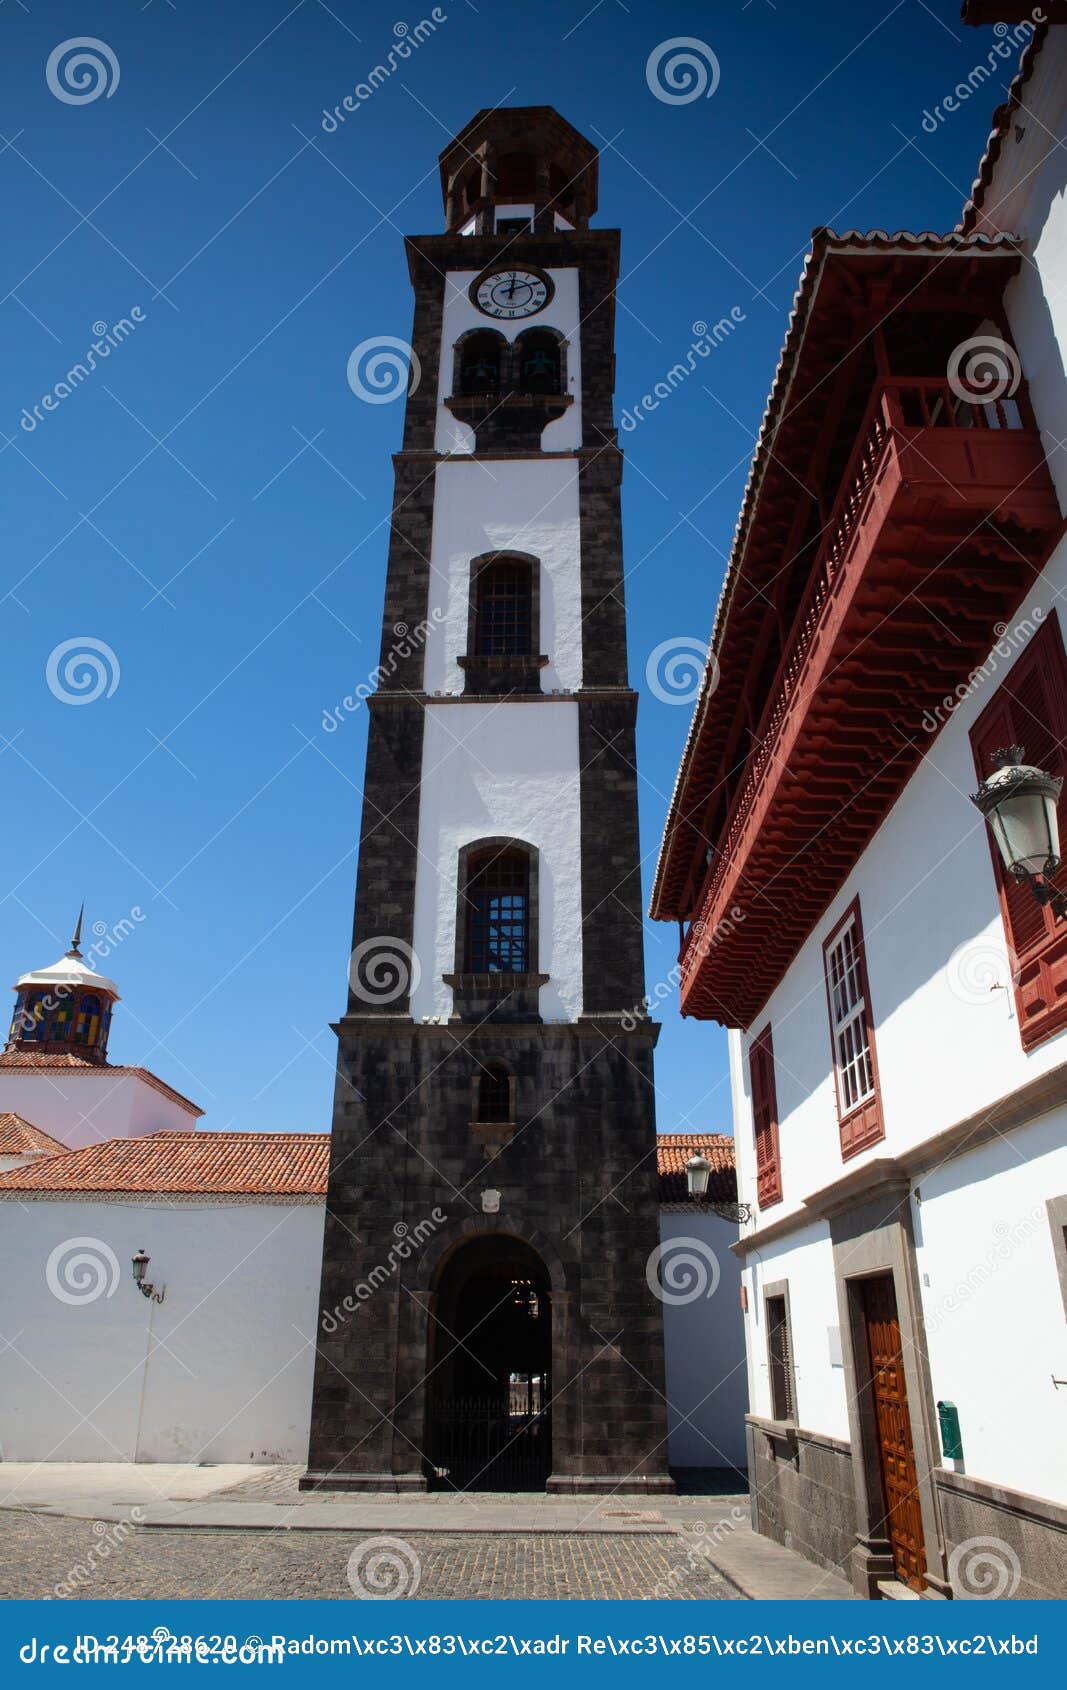 church of the immaculate conception, santa cruz de tenerife